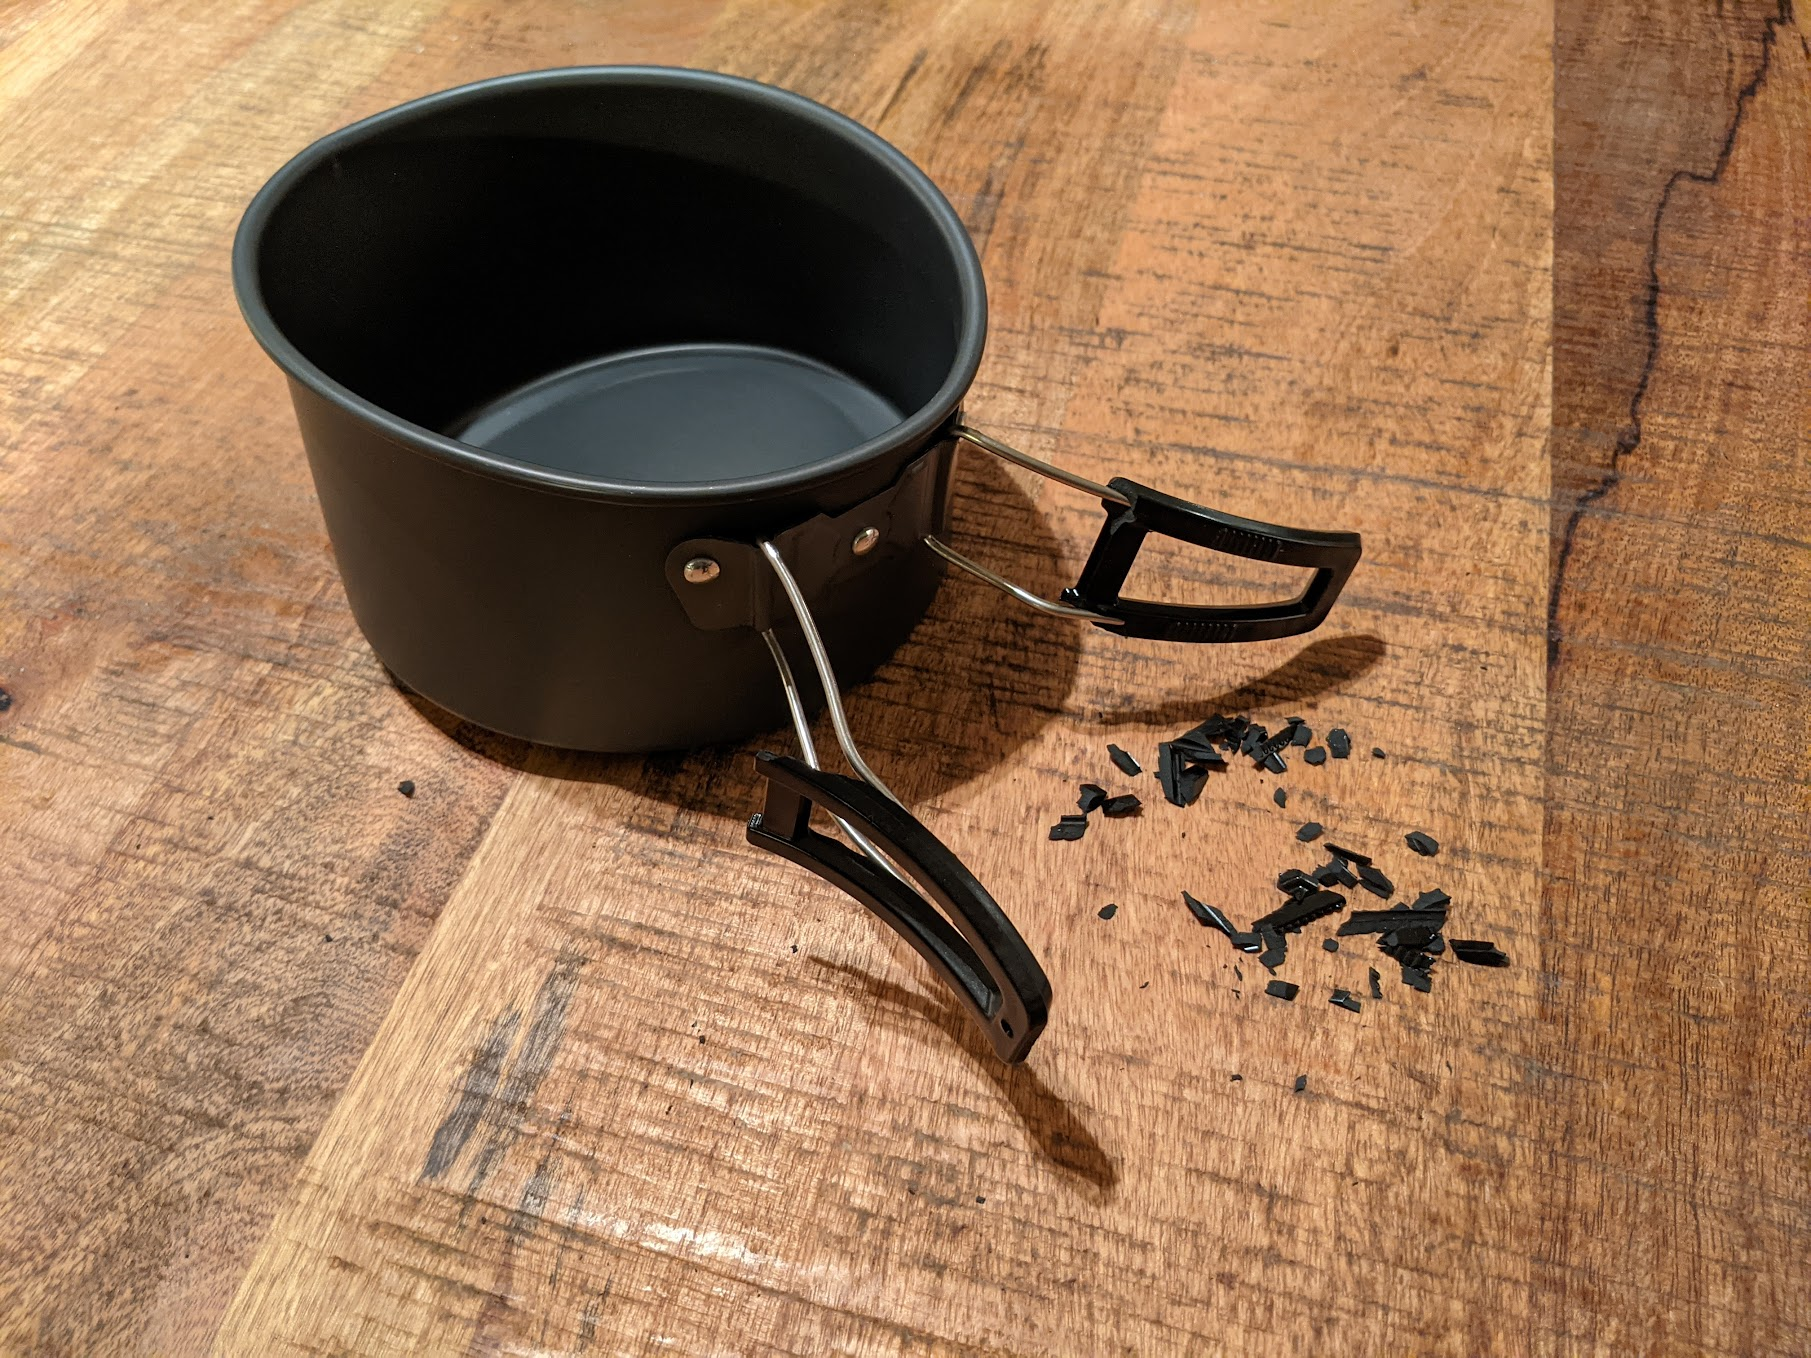 Broken handle on the Odoland cookware